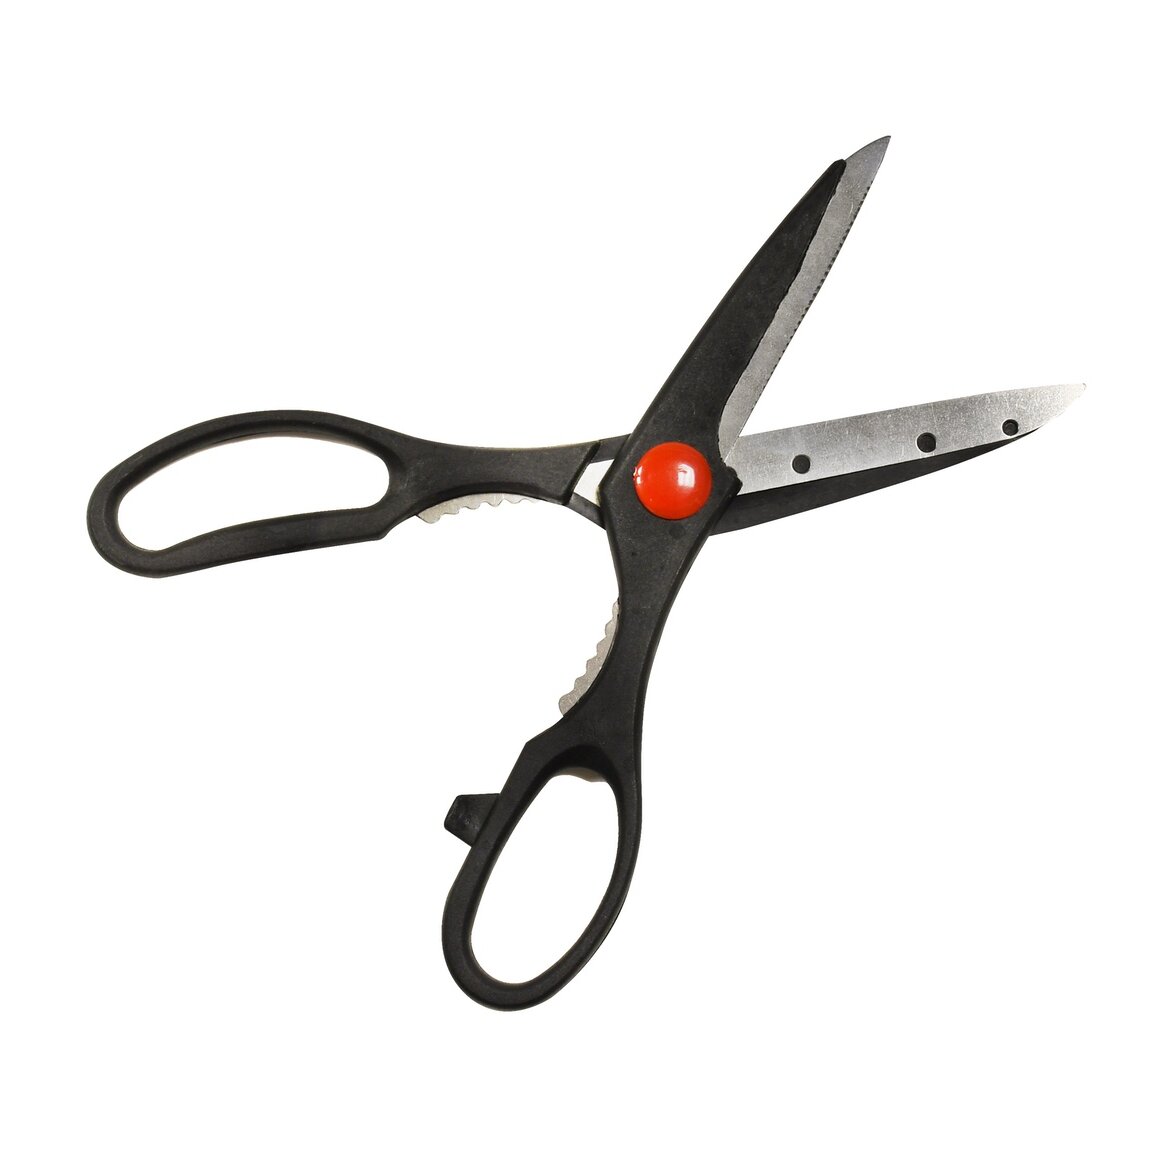 Cuisinart Shears, 8 Inch Kitchen Scissors, Black